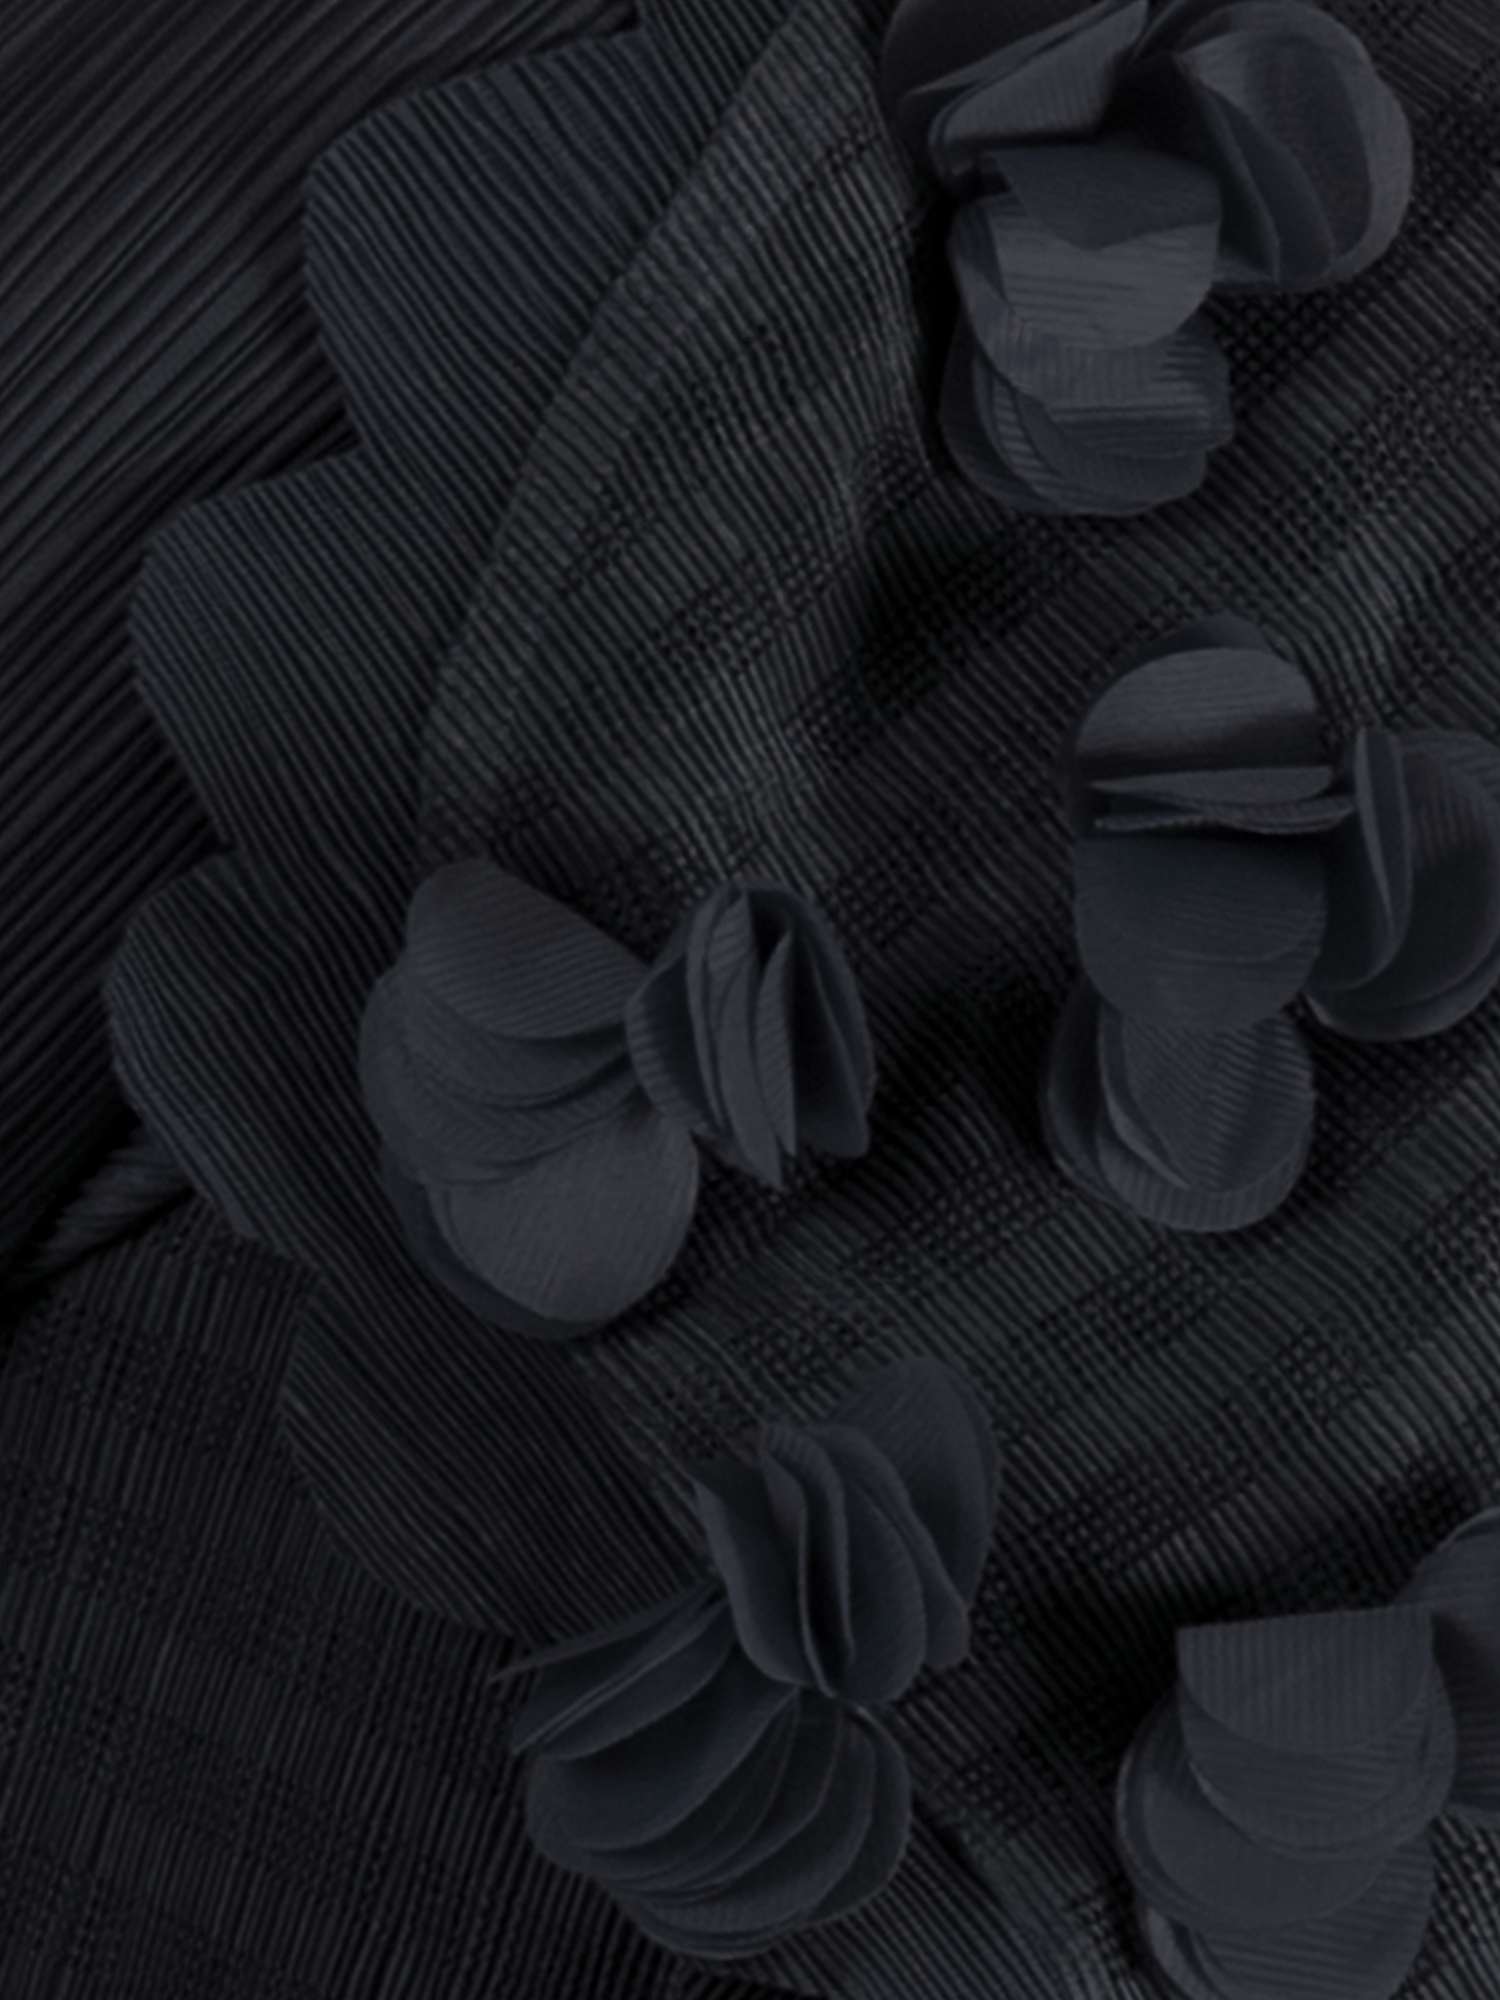 Buy chesca Applique Chiffon Flower Pleated Dress, Black Online at johnlewis.com